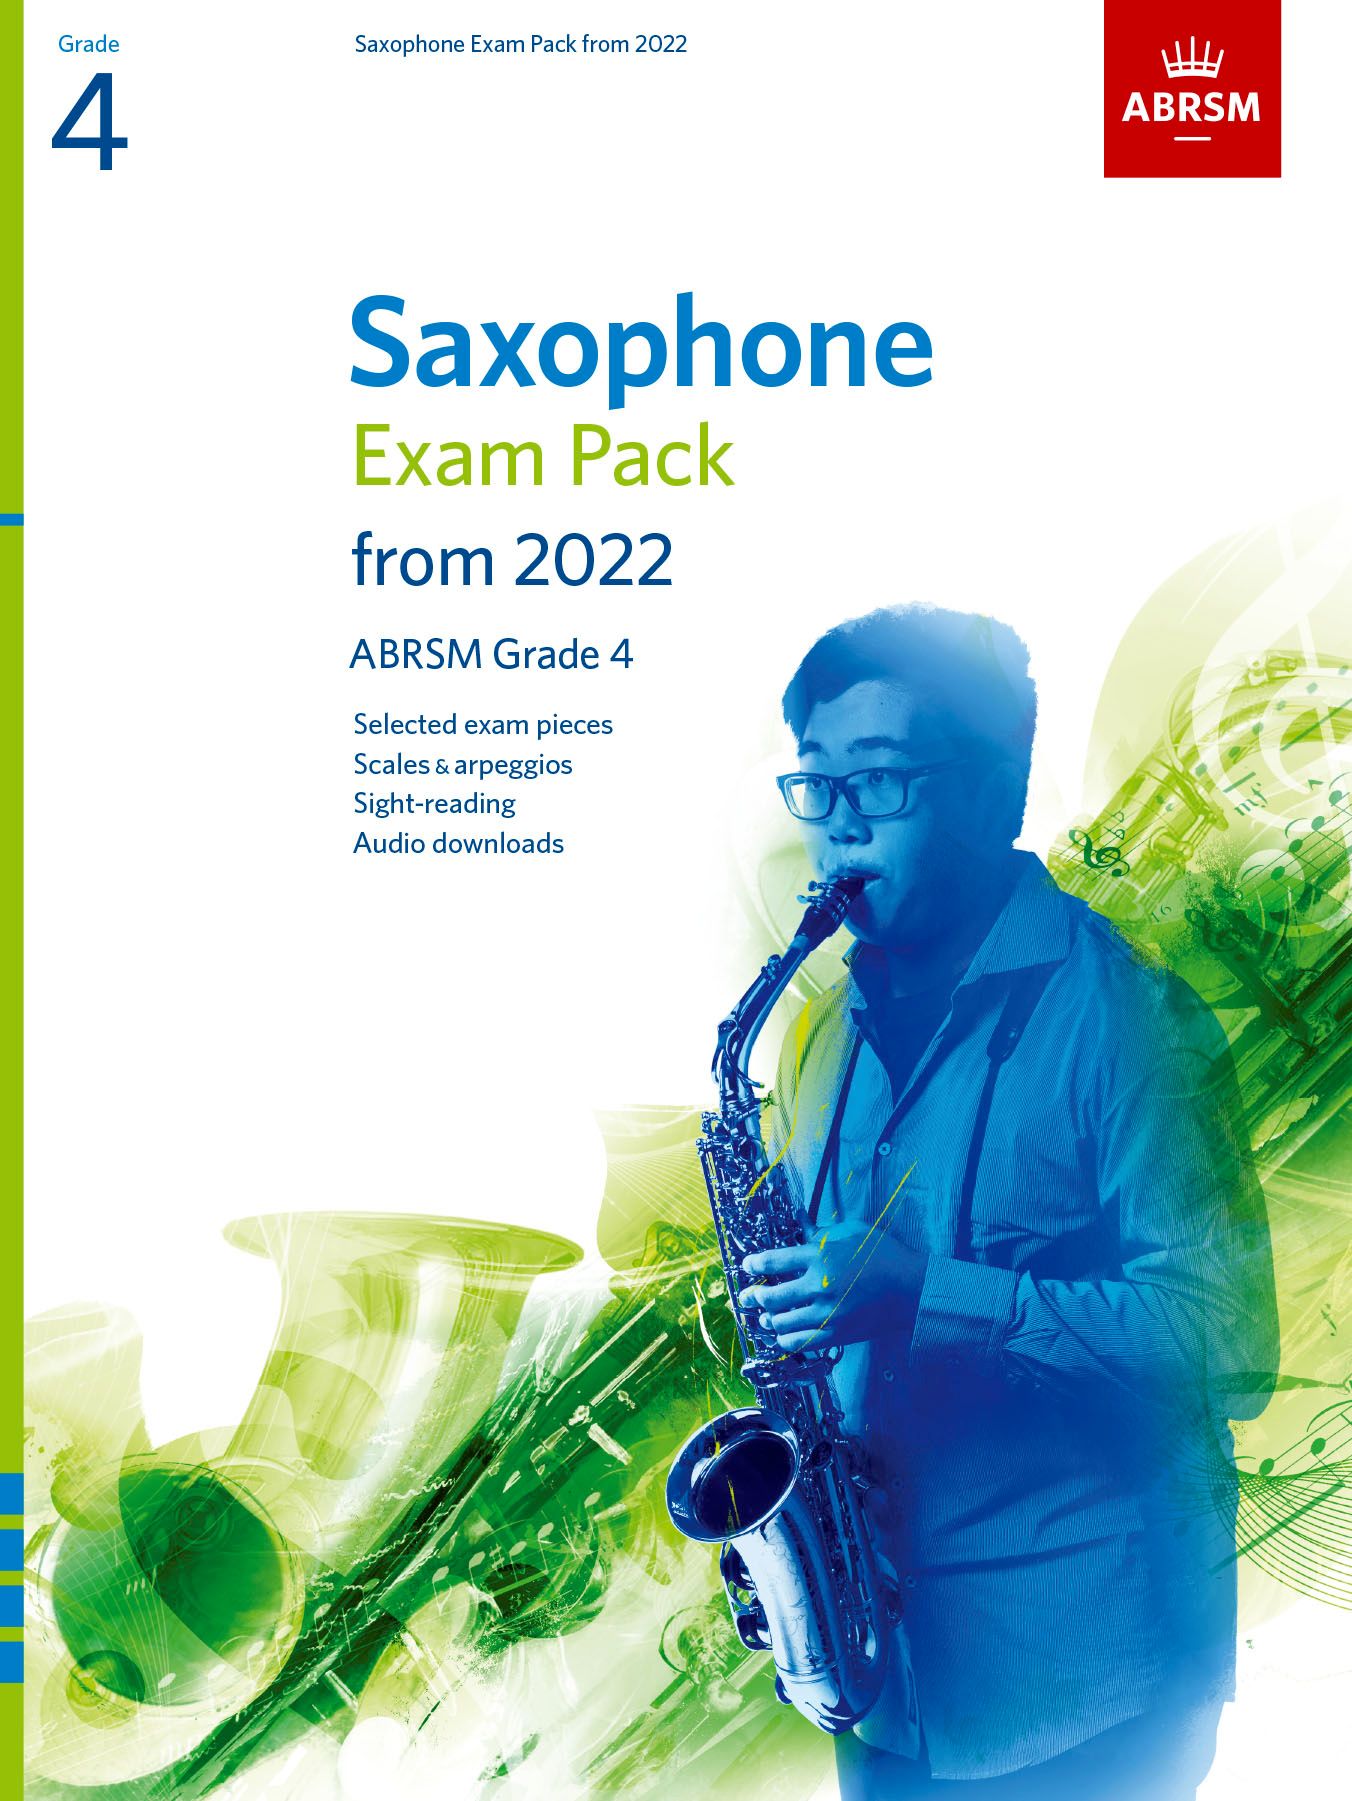 ABRSM Saxophone Exam Pack from 2022, ABRSM Grade 4